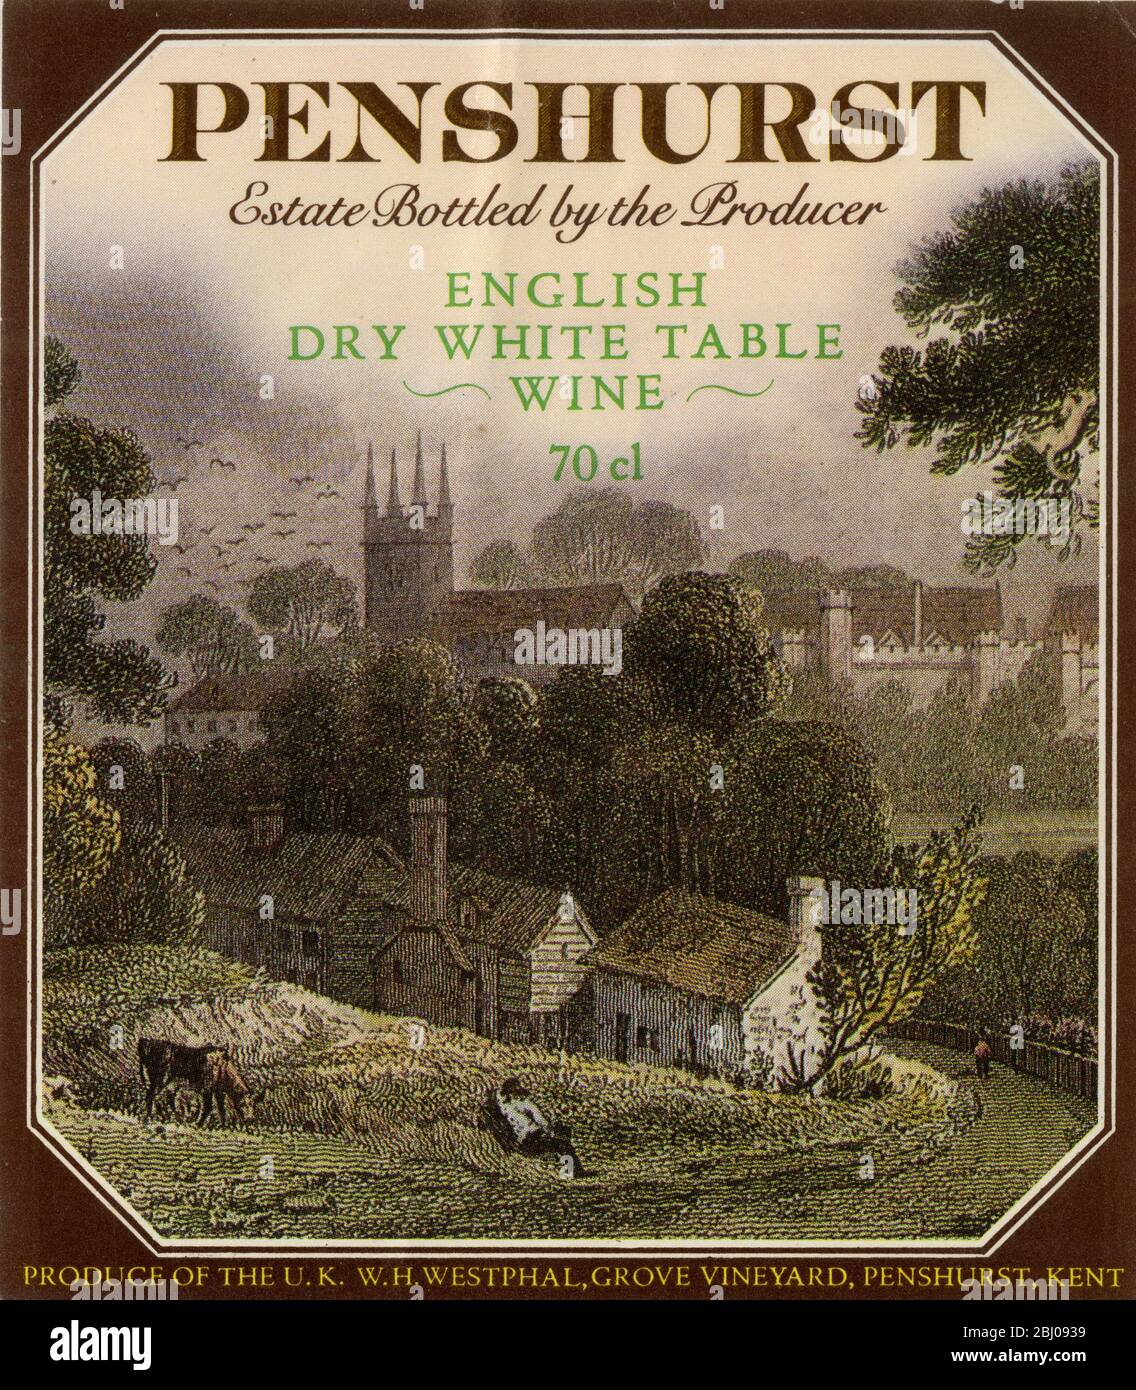 Wine Label. - Penshurst. Estate Bottled by the Producer. English Dry White Table Wine. 70cl. - Produce of the UK. W.H.Westphal Grove, Vineyard, Penshurst, Kent. Stock Photo